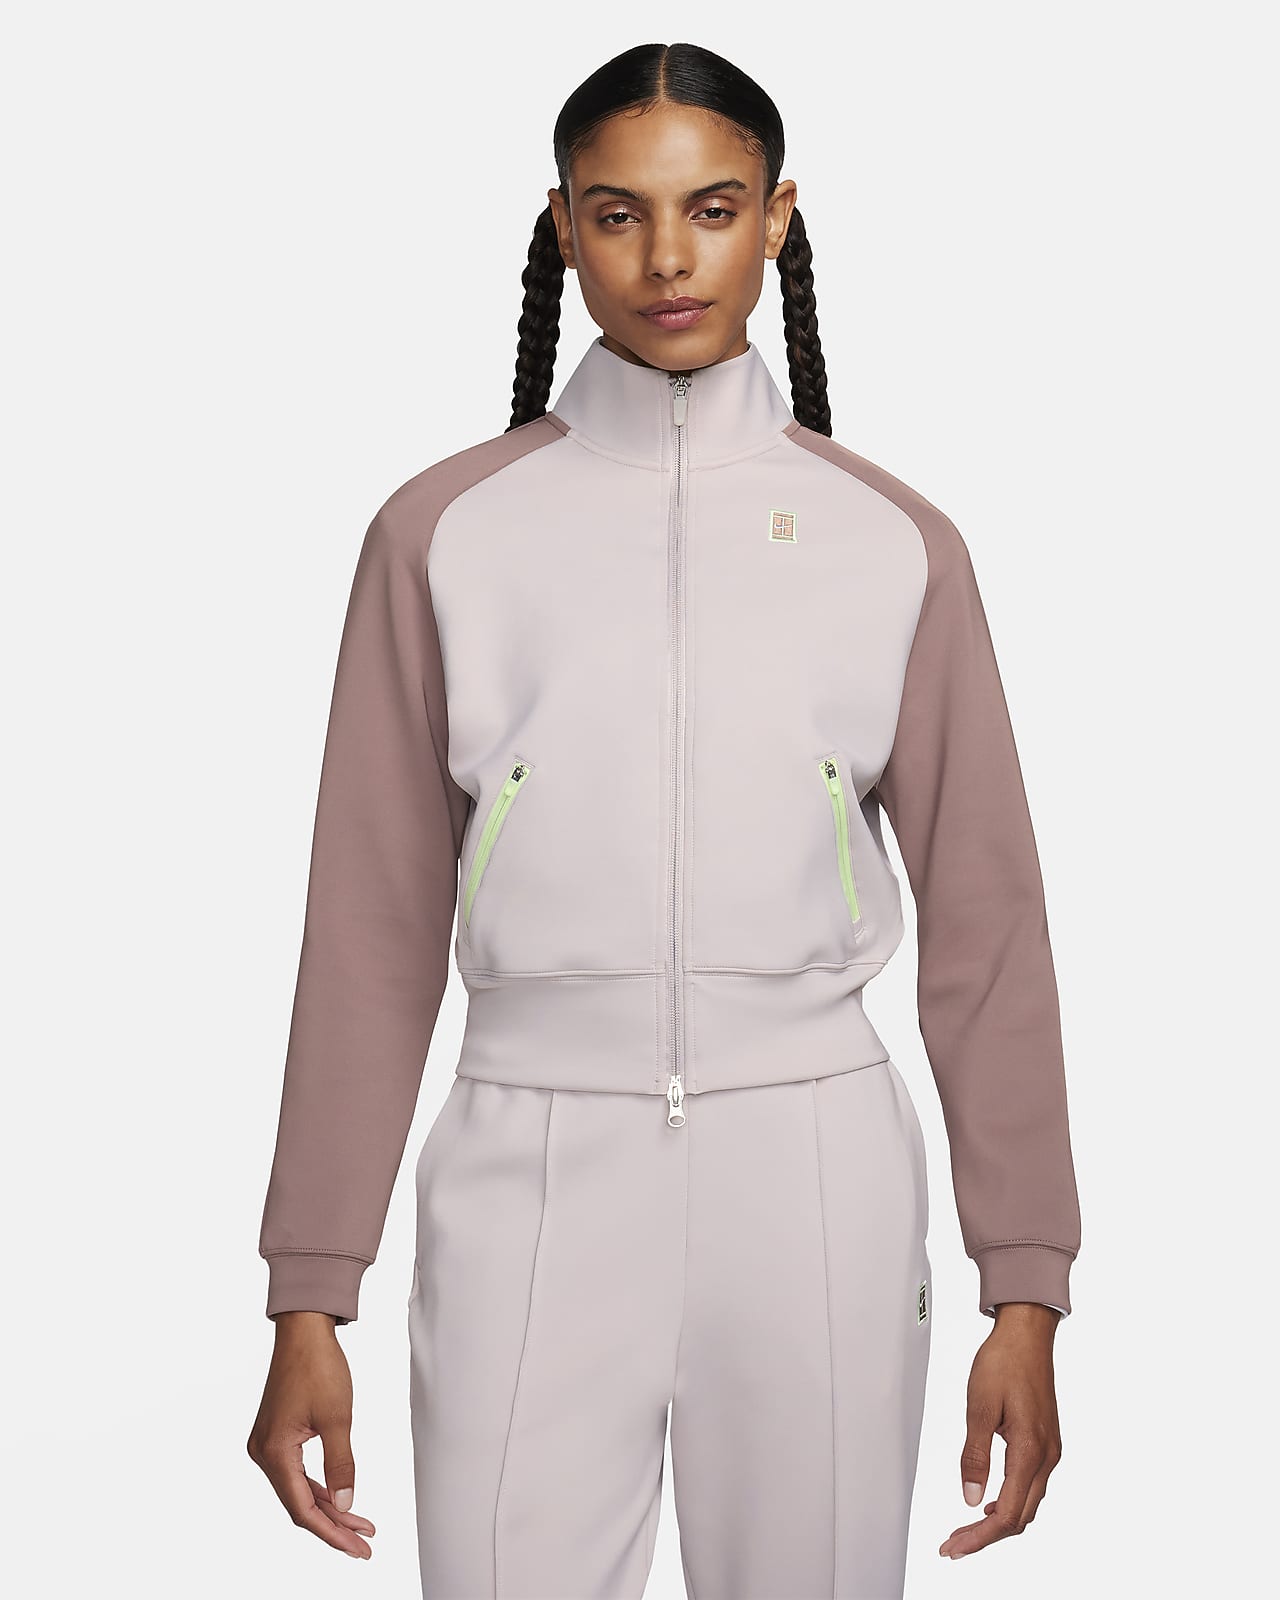 Women's Tennis Clothing. Nike PH